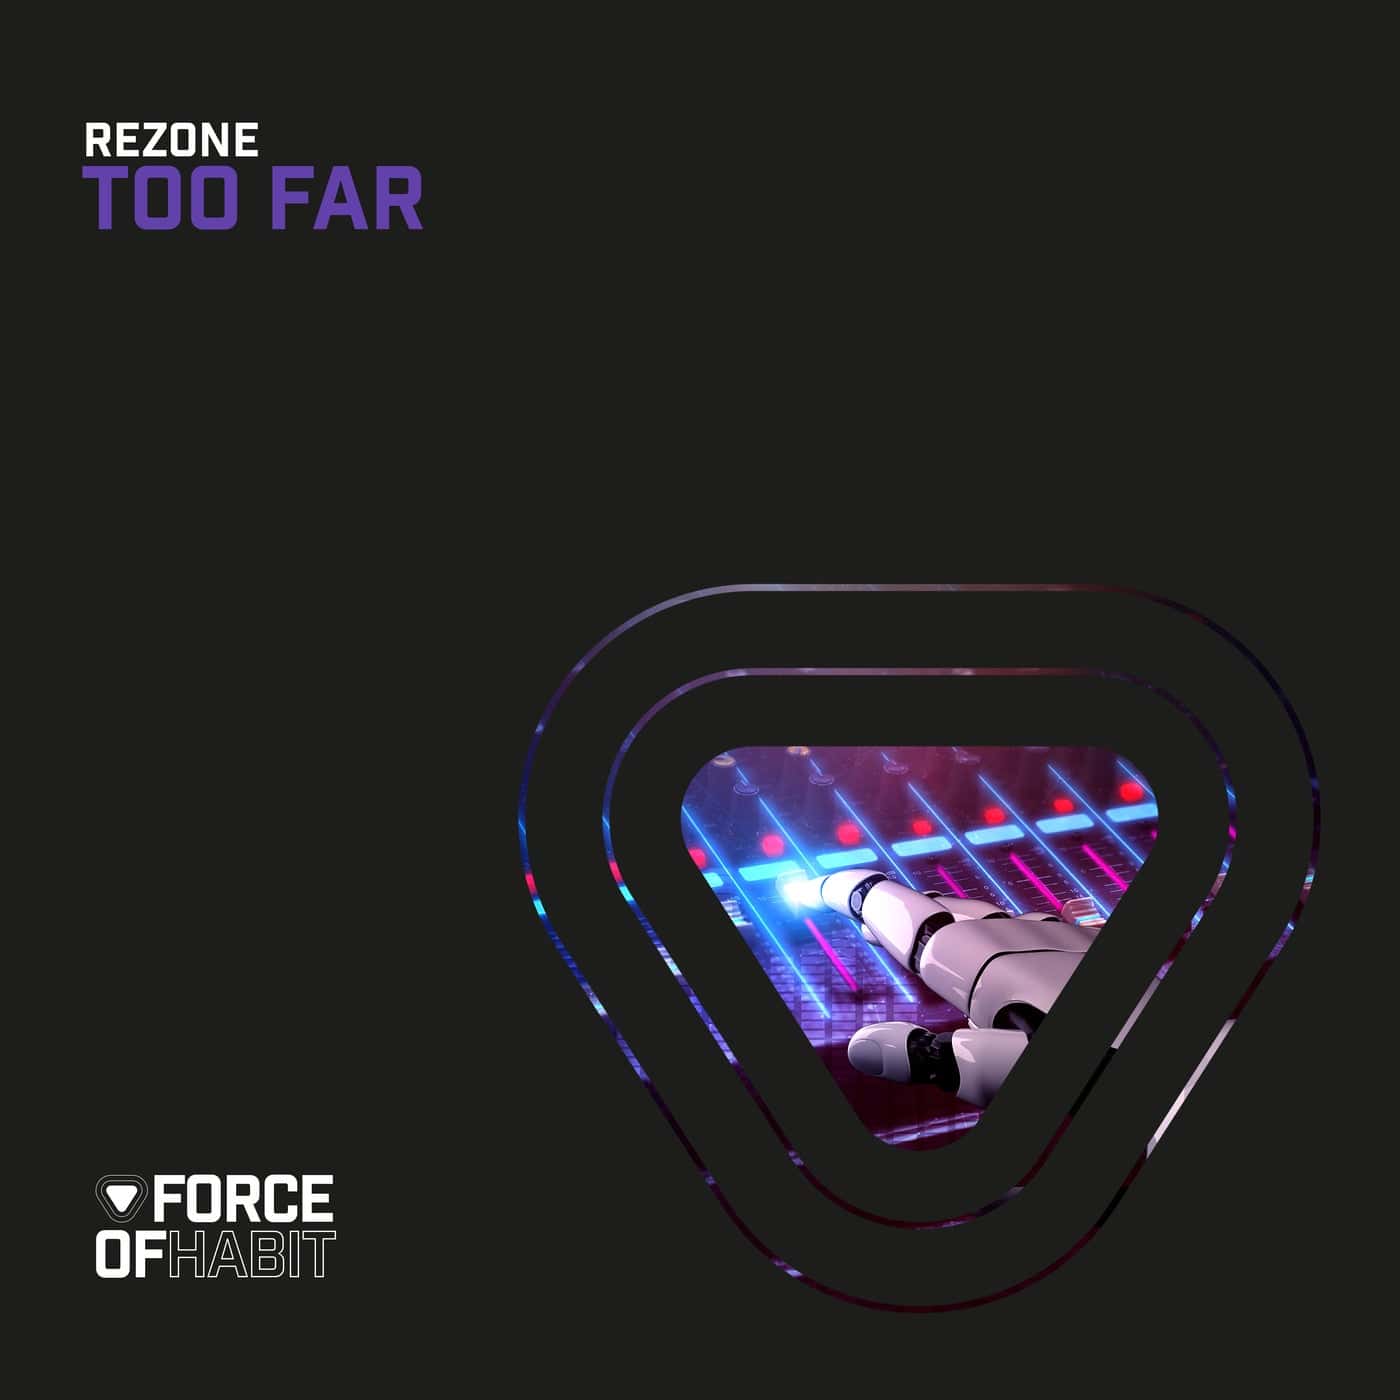 Download Rezone - Too Far on Electrobuzz